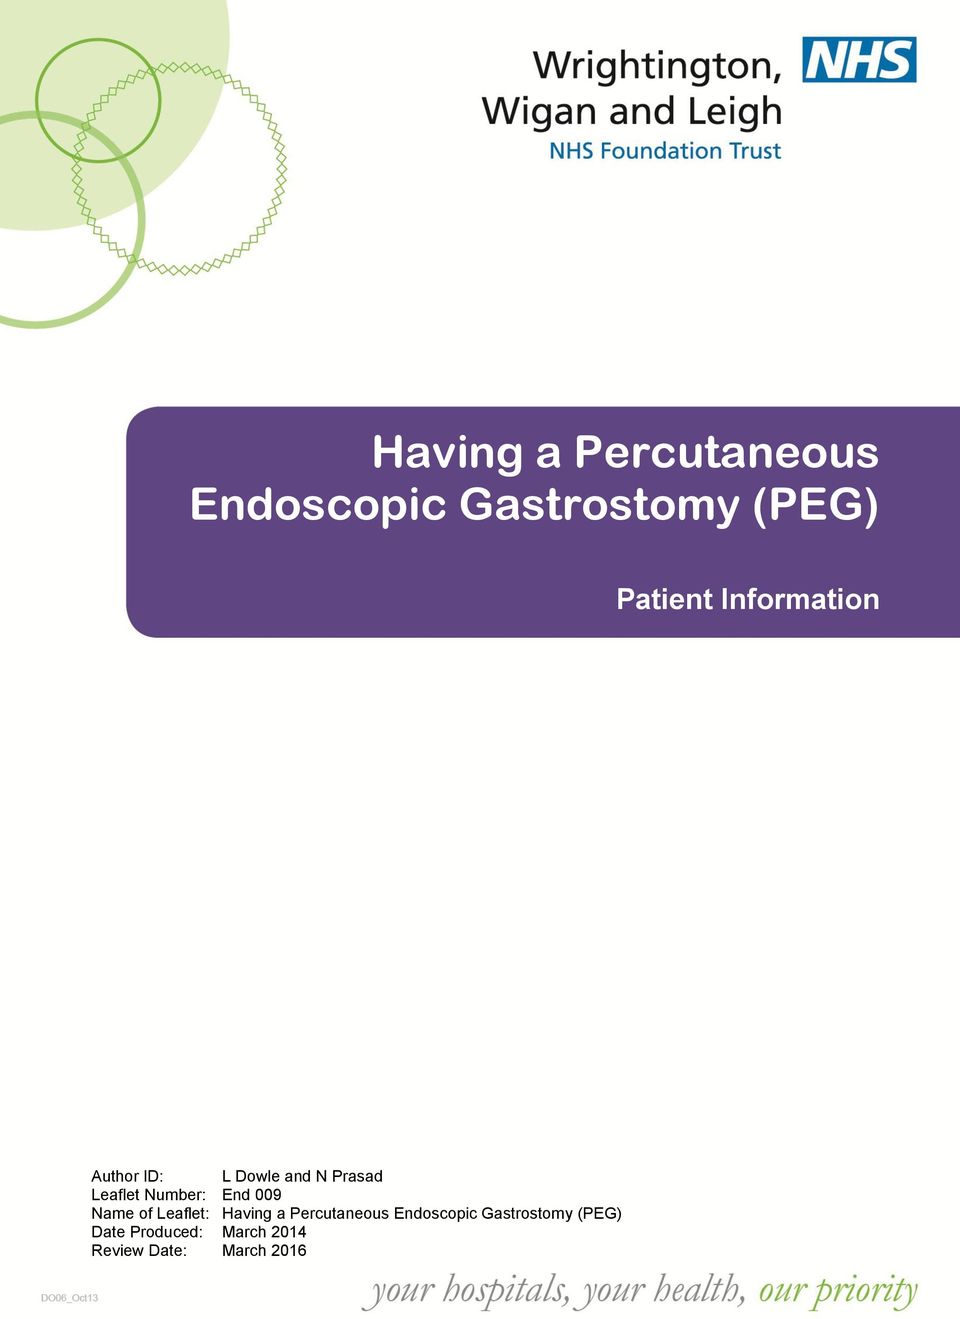 Having a Percutaneous Endoscopic Gastrostomy (PEG) Date Produced: March 2014